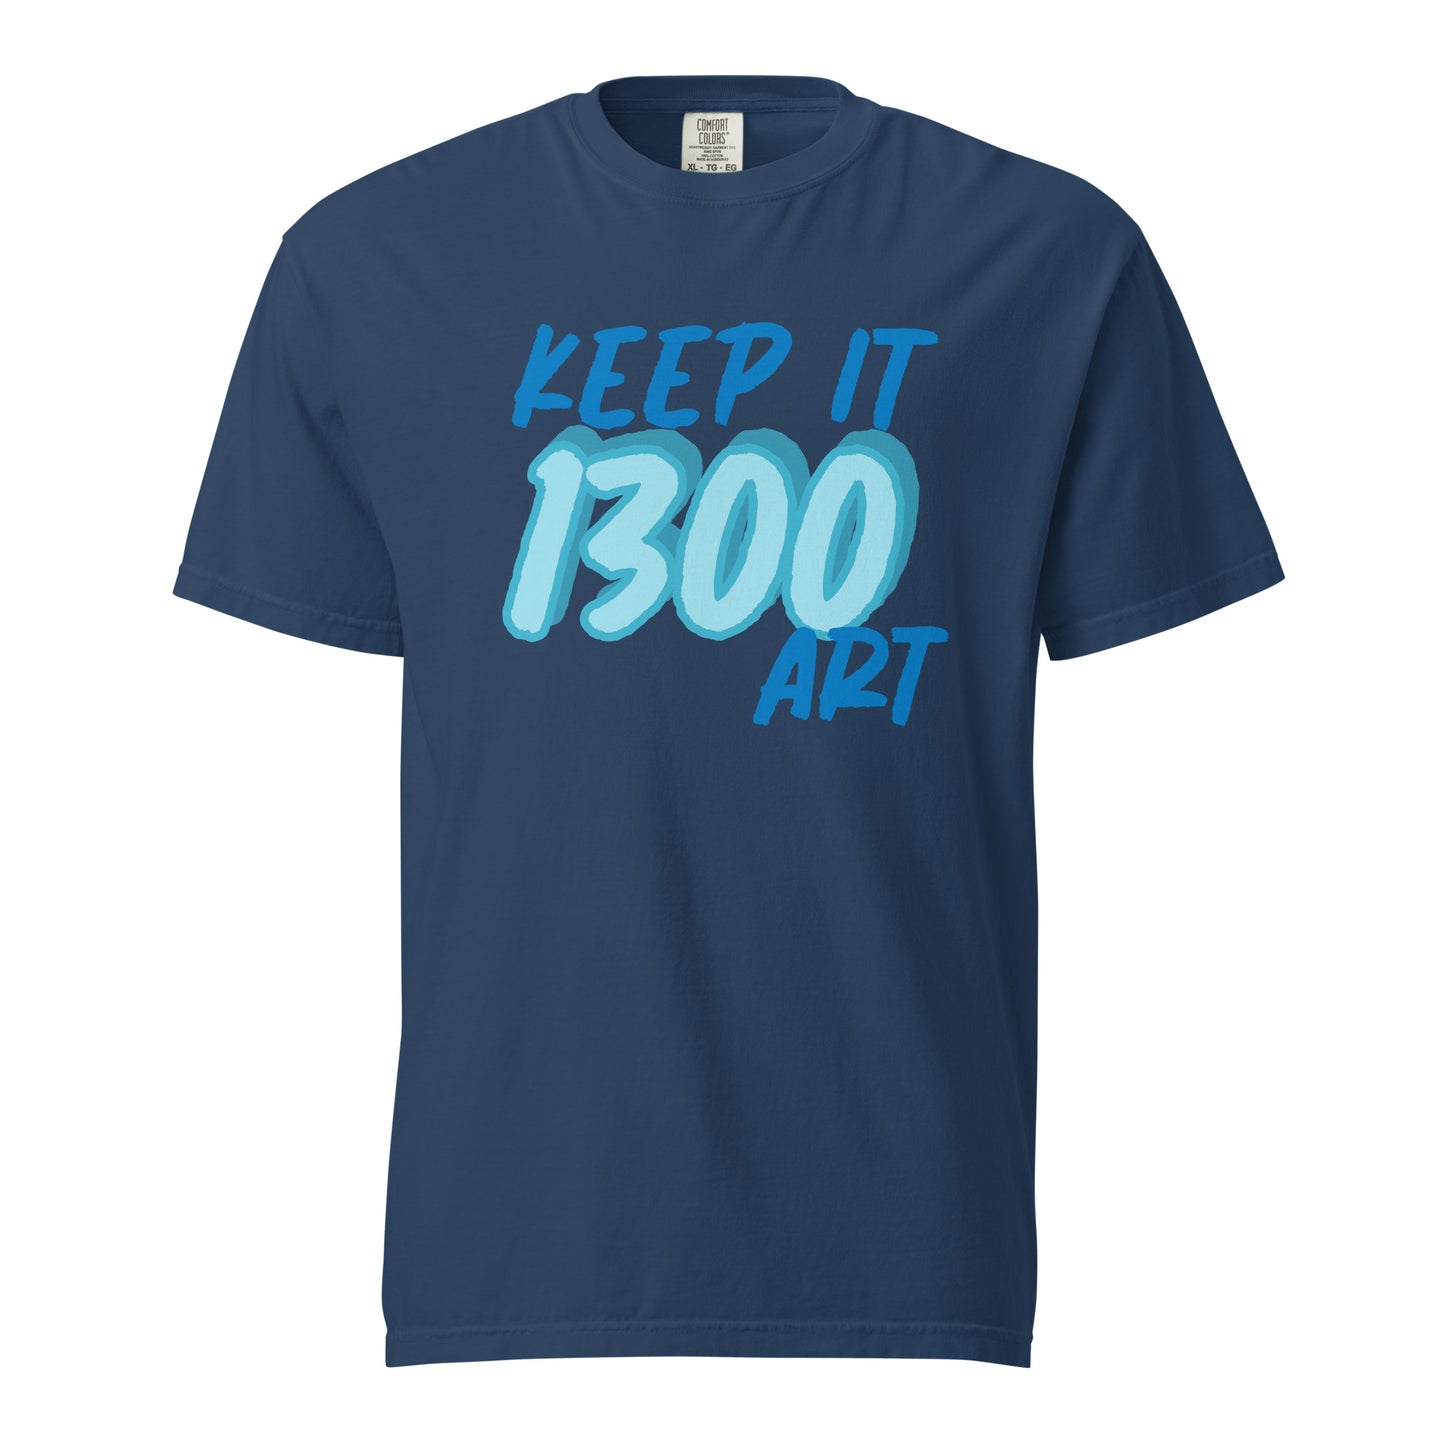 "Keep it 1300 ART" Unisex T-shirts